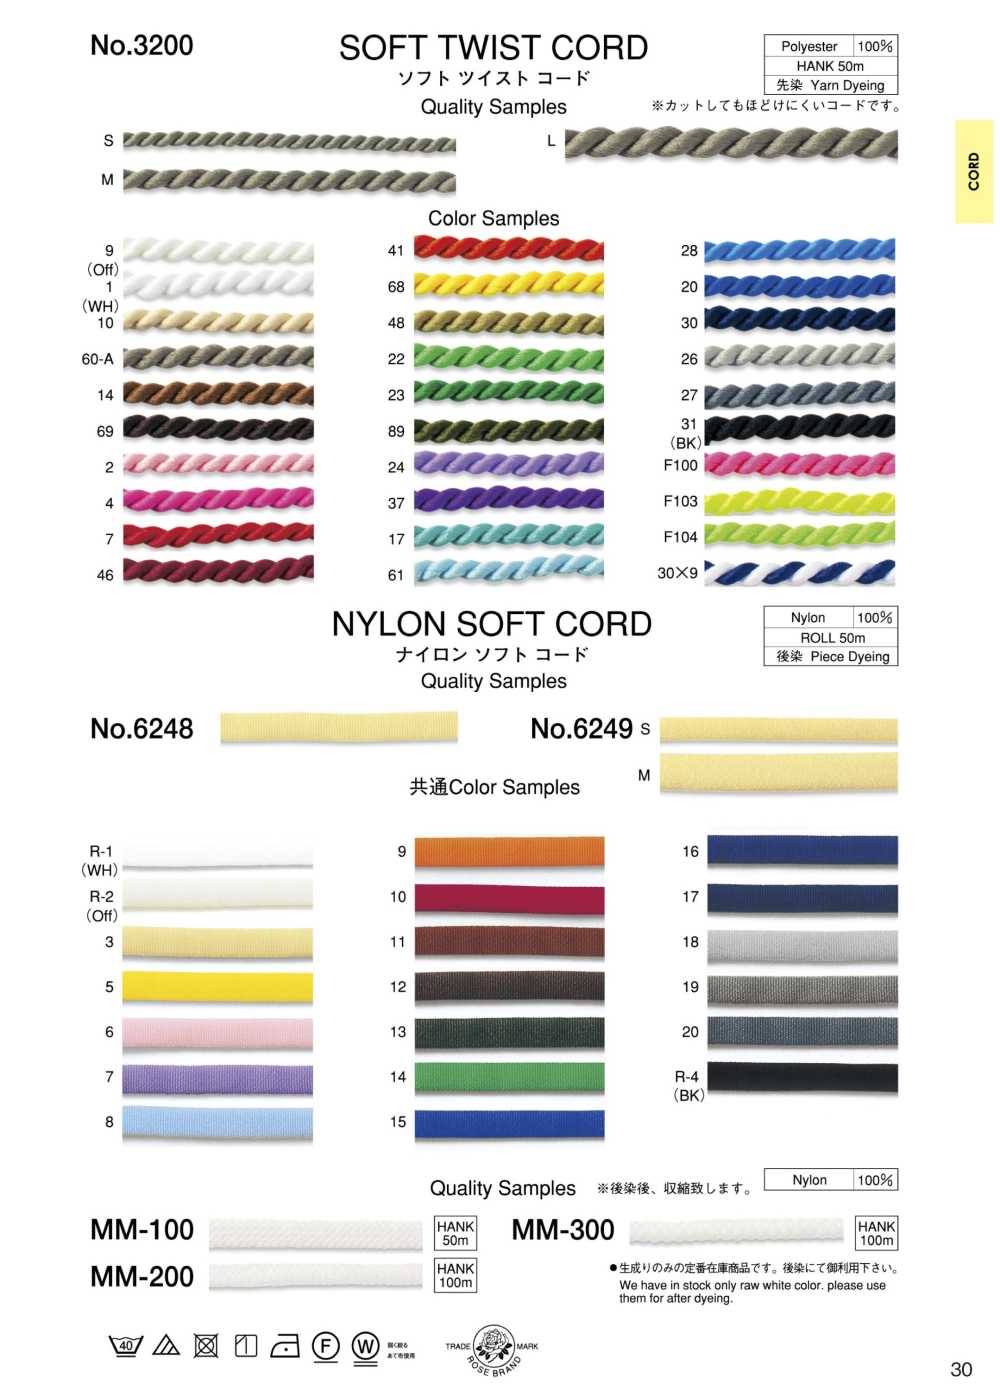 MM-100 Nylon Soft Cord[Ribbon Tape Cord] ROSE BRAND (Marushin)